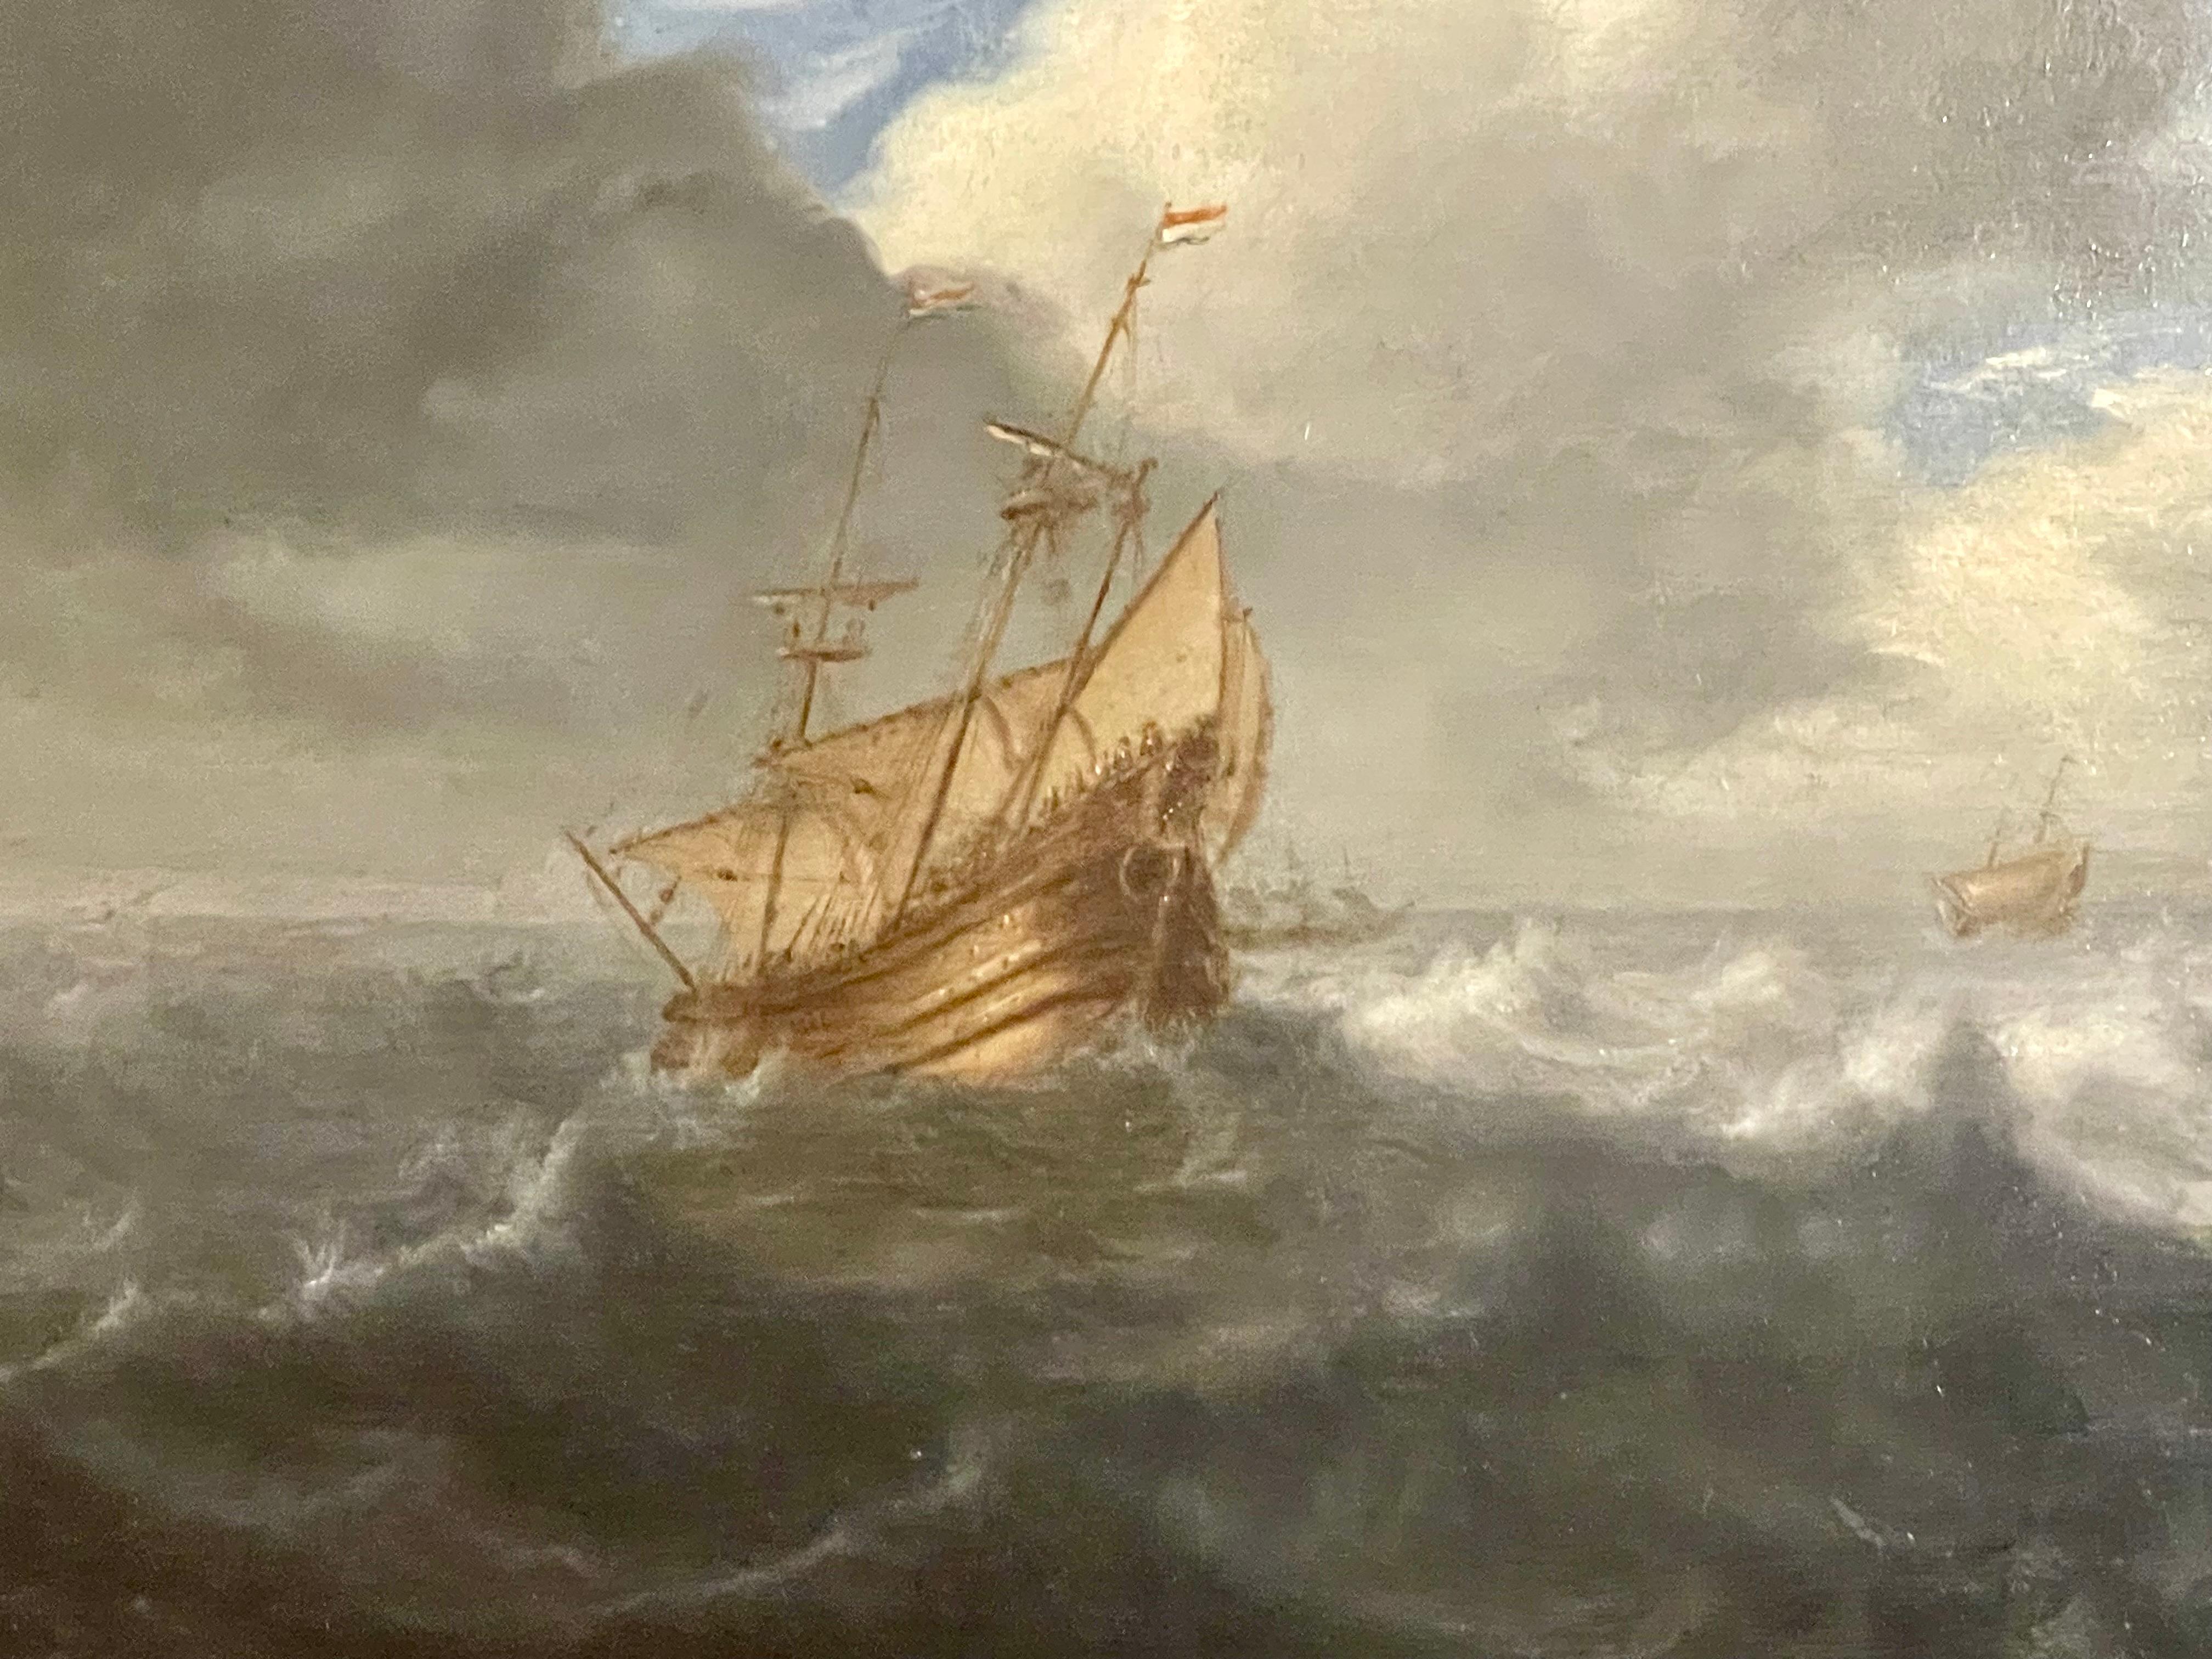 paintings of ships in rough seas